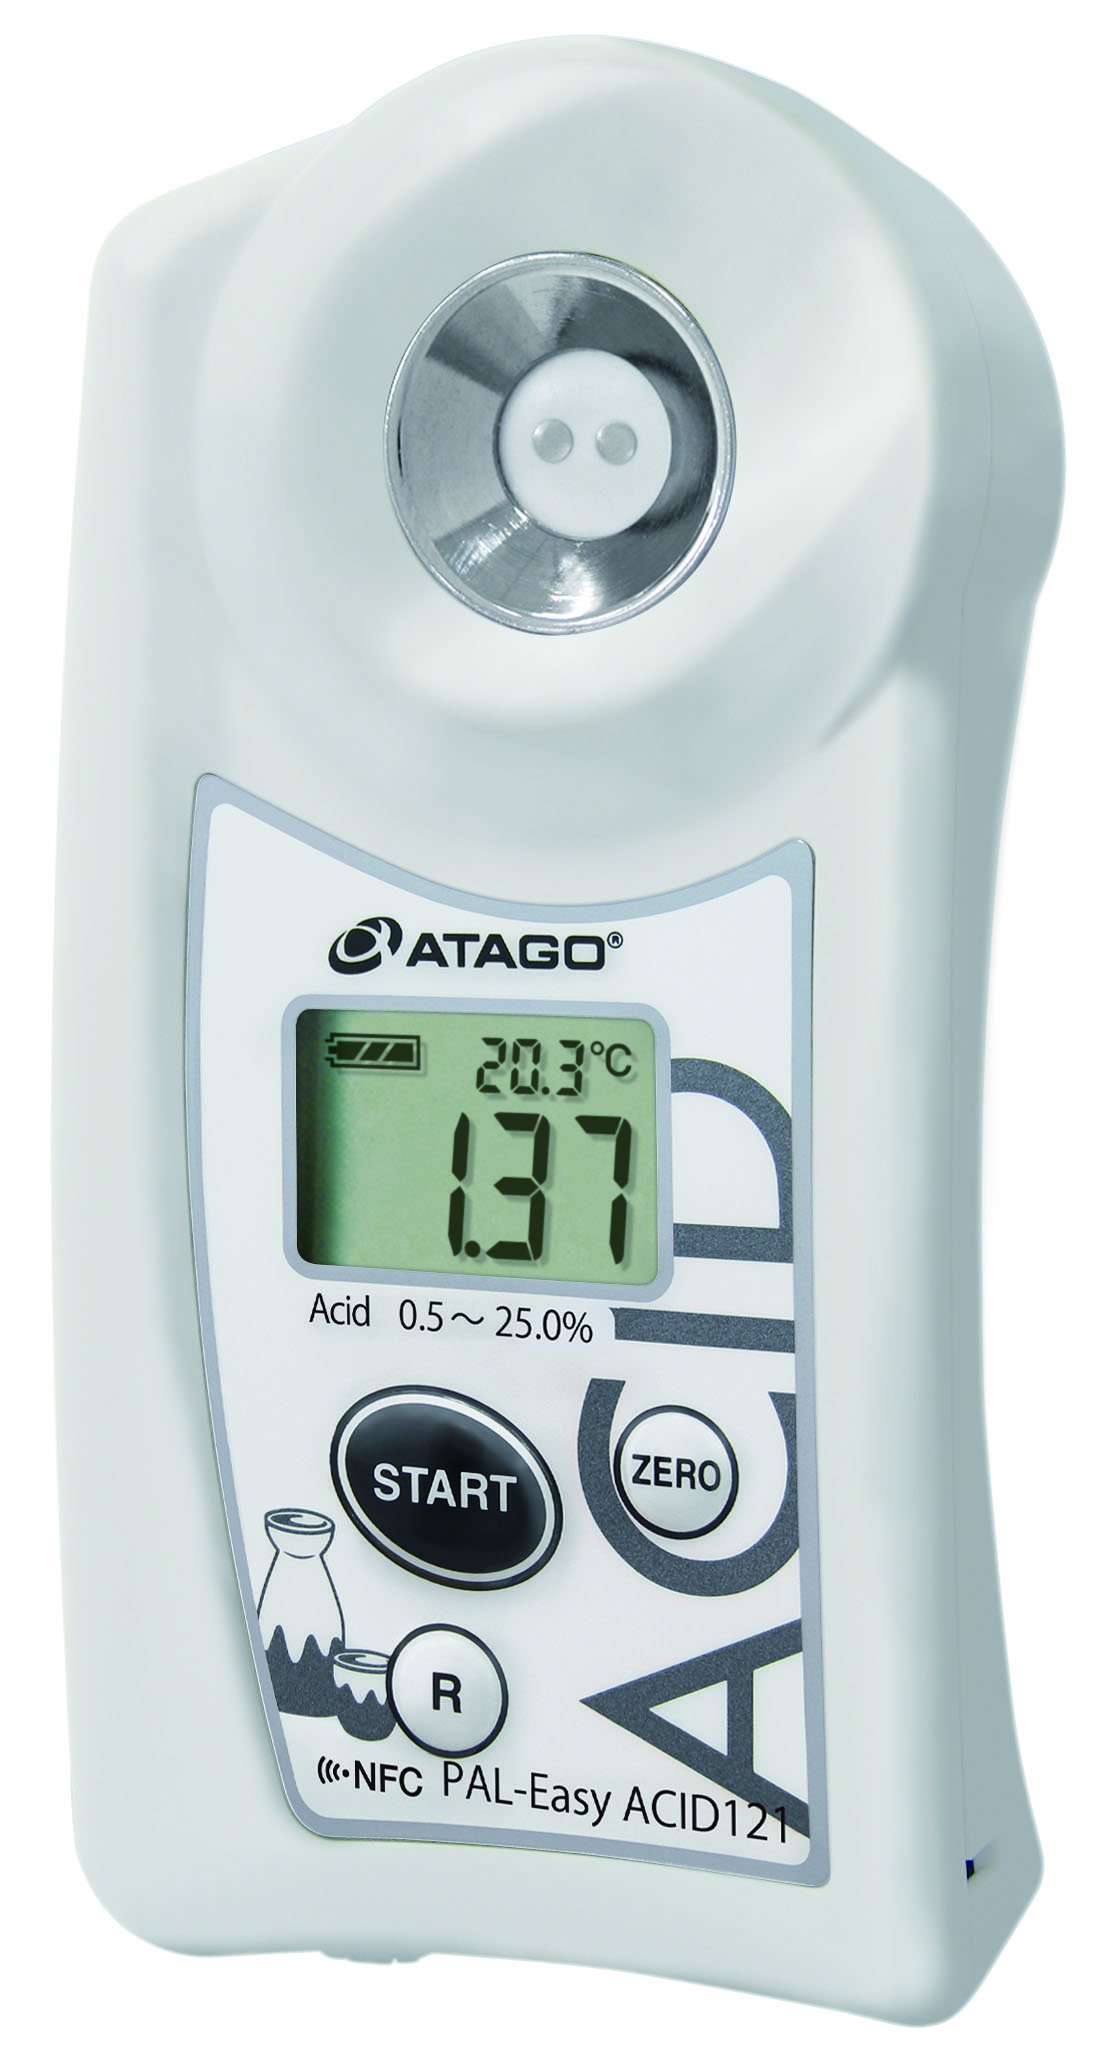 Atago 7721 Pocket Acidity Meter PAL-Easy ACID121 Master Kit for Sake, Acid : 0.50 to 25.0％ Measurement Range